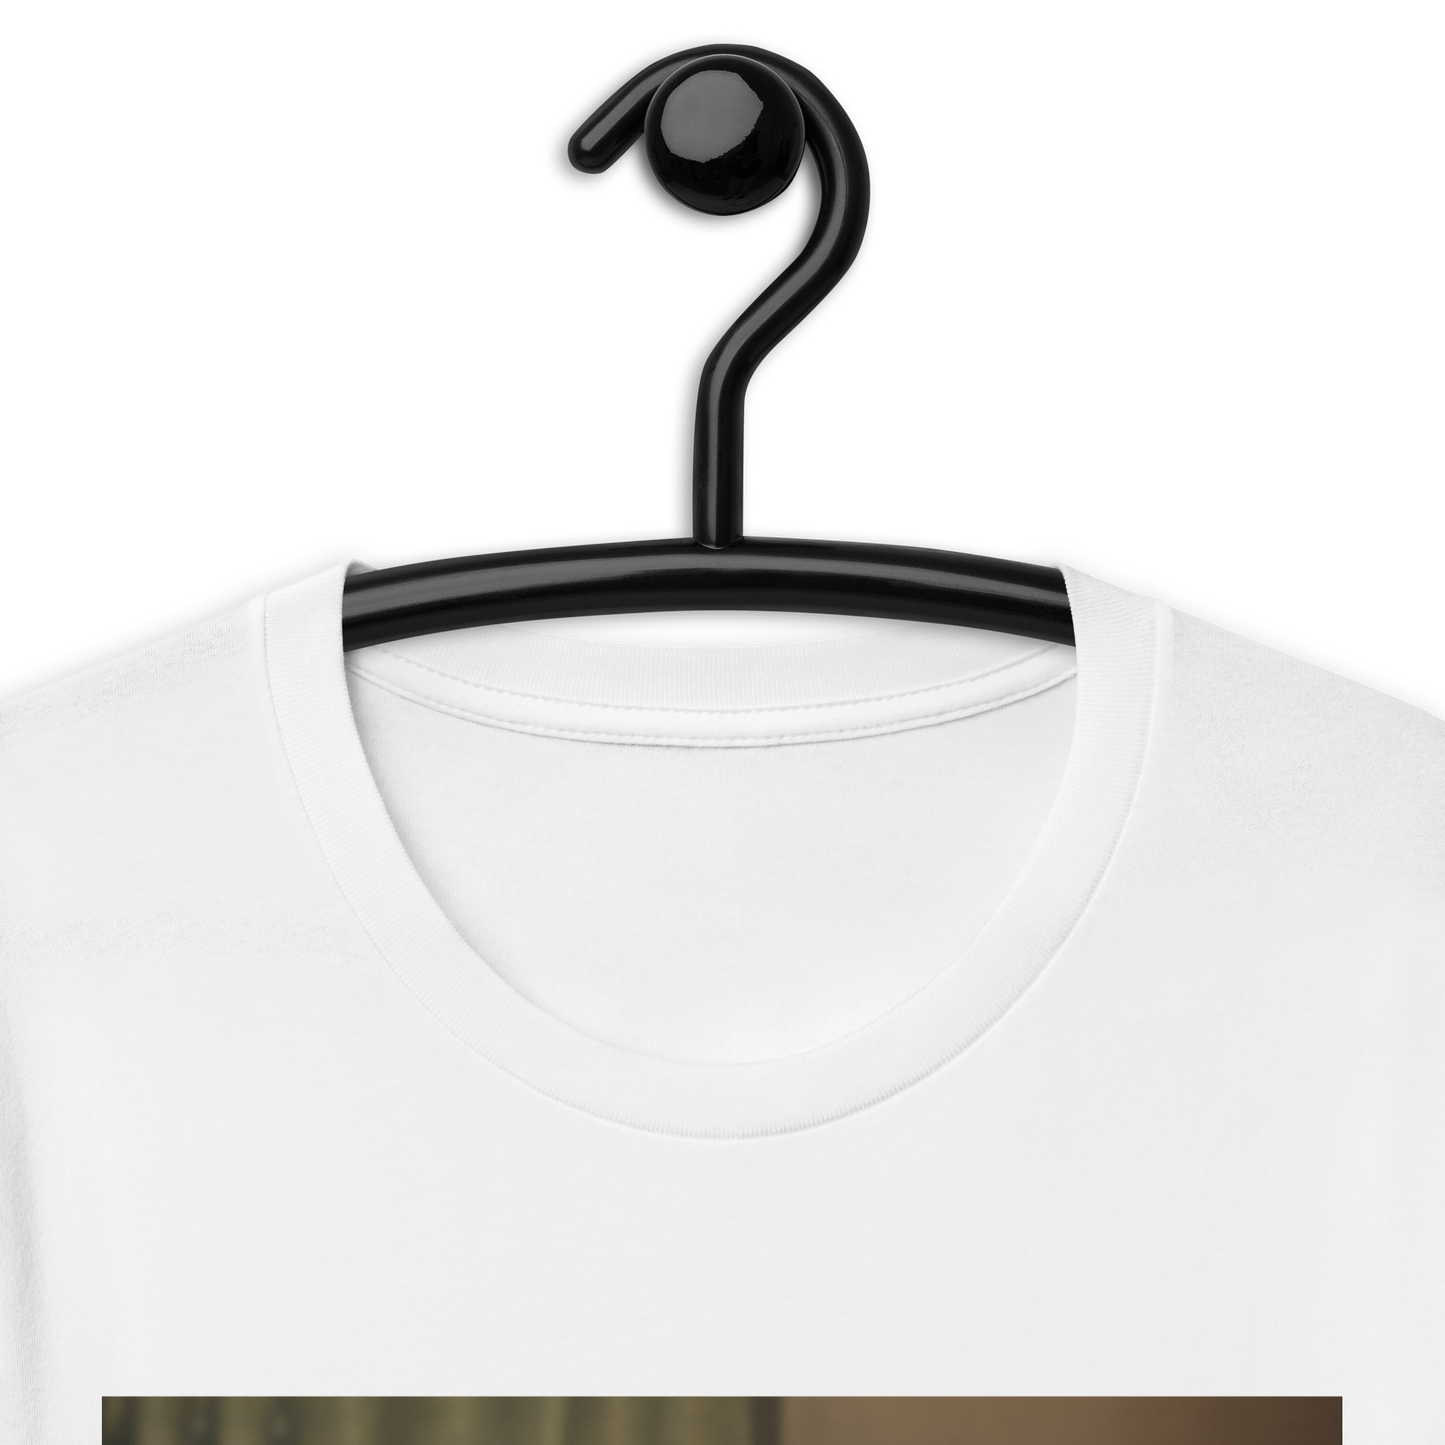 Hippo Accountant Unisex t-shirt